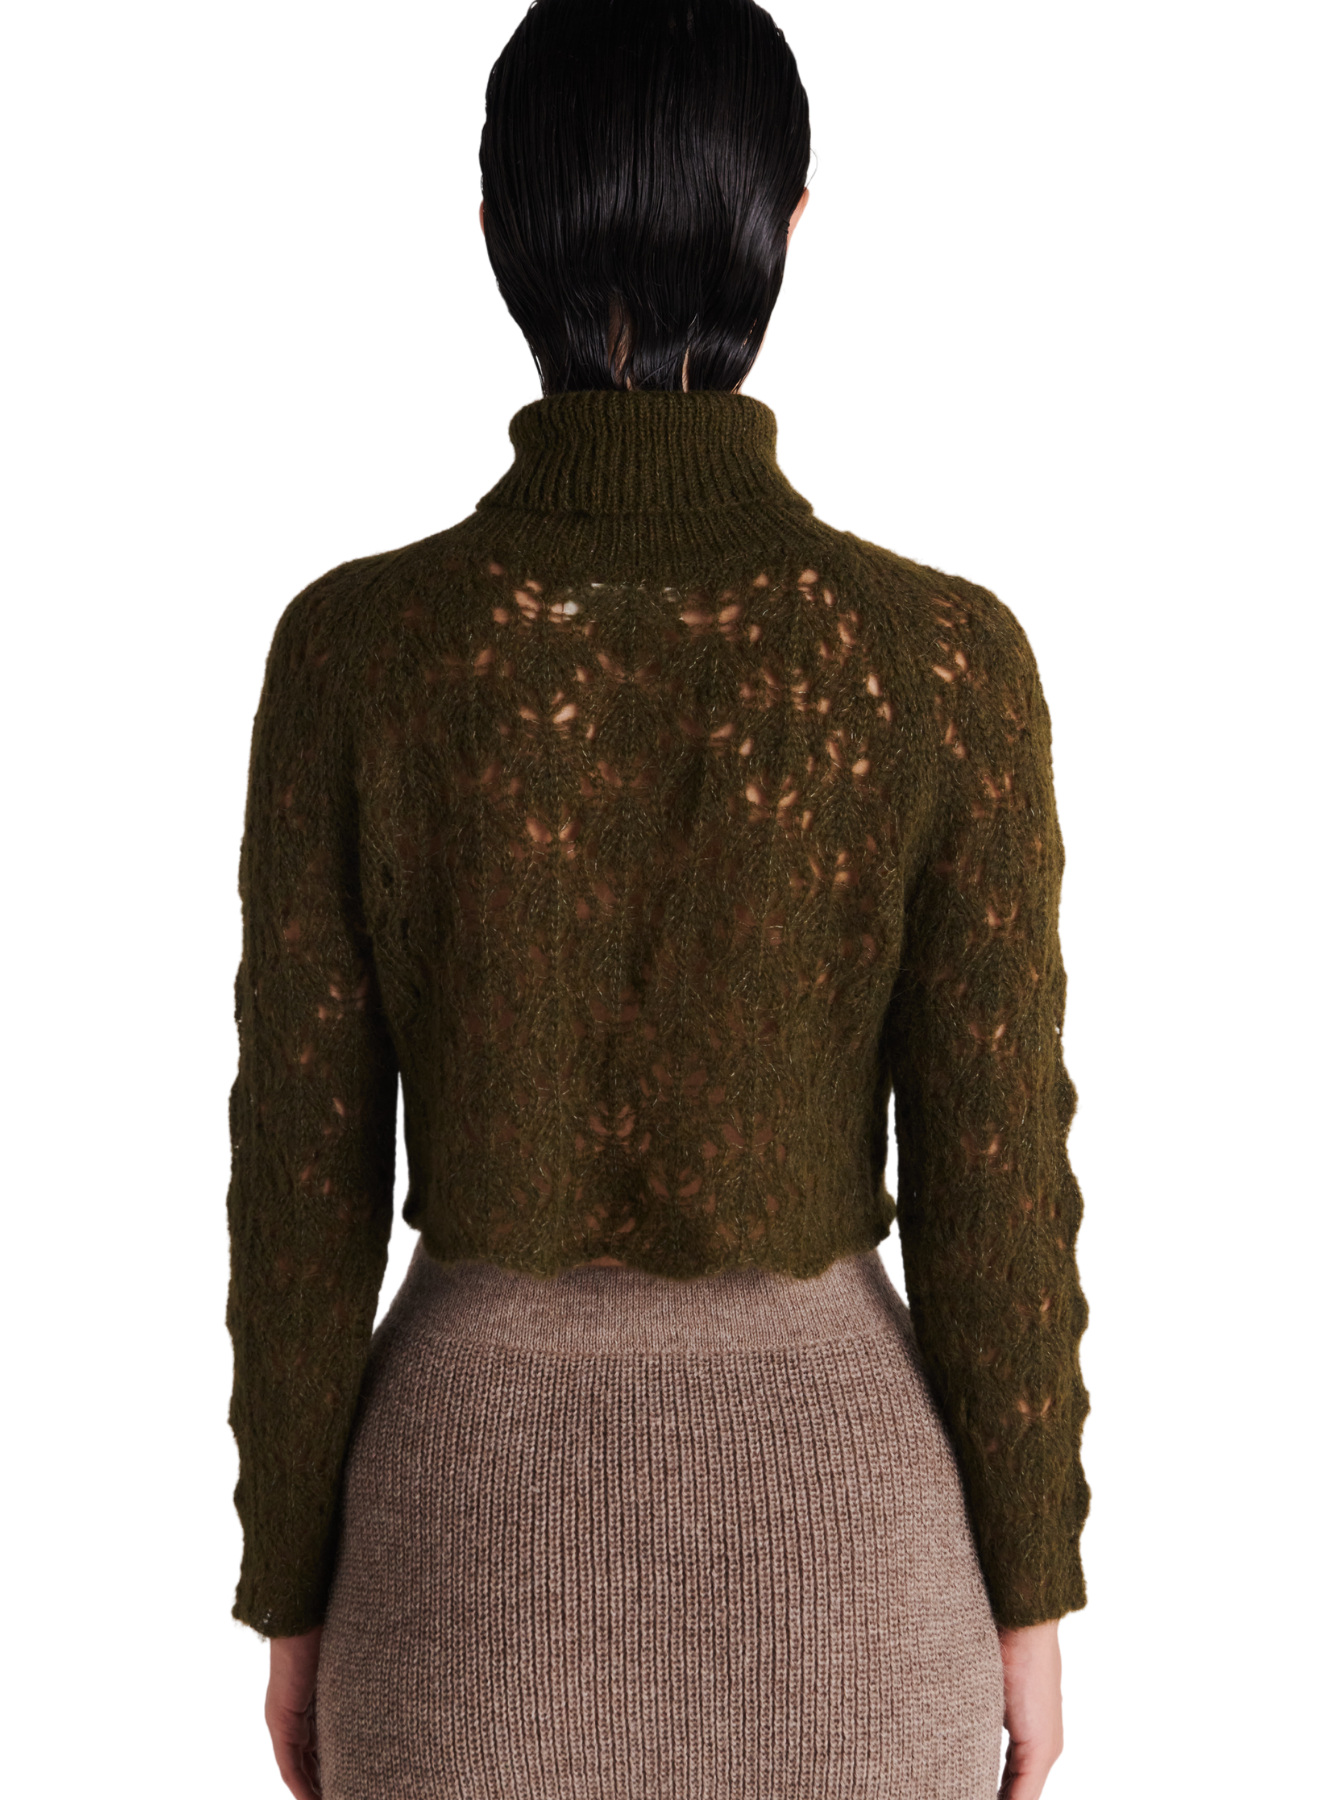 KARAY sweater (pre-order) AYNI universe